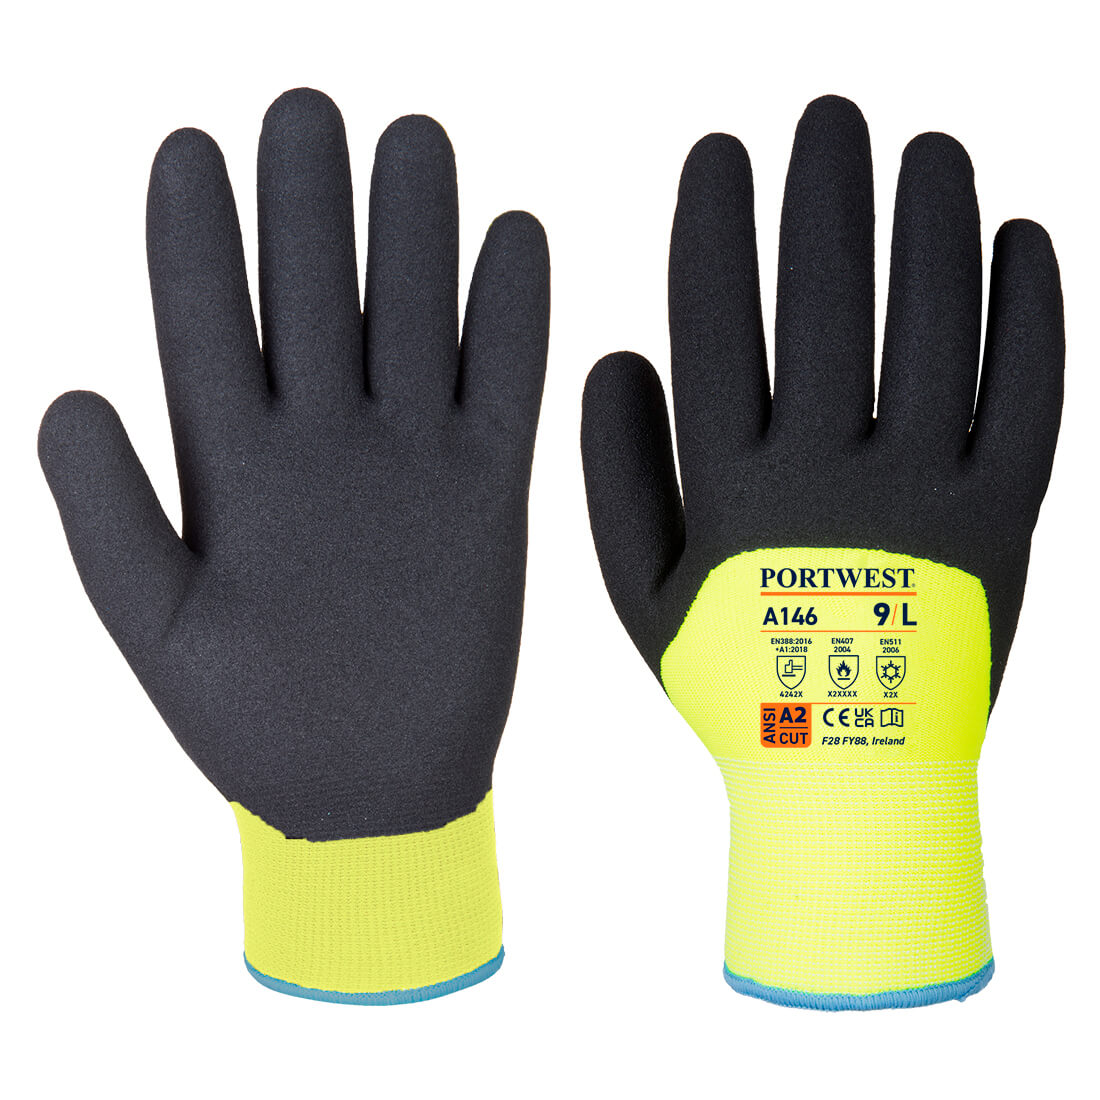 A146 Portwest® 3/4 Dipped Hi-Viz Arctic Winter Cut Safety Work Gloves